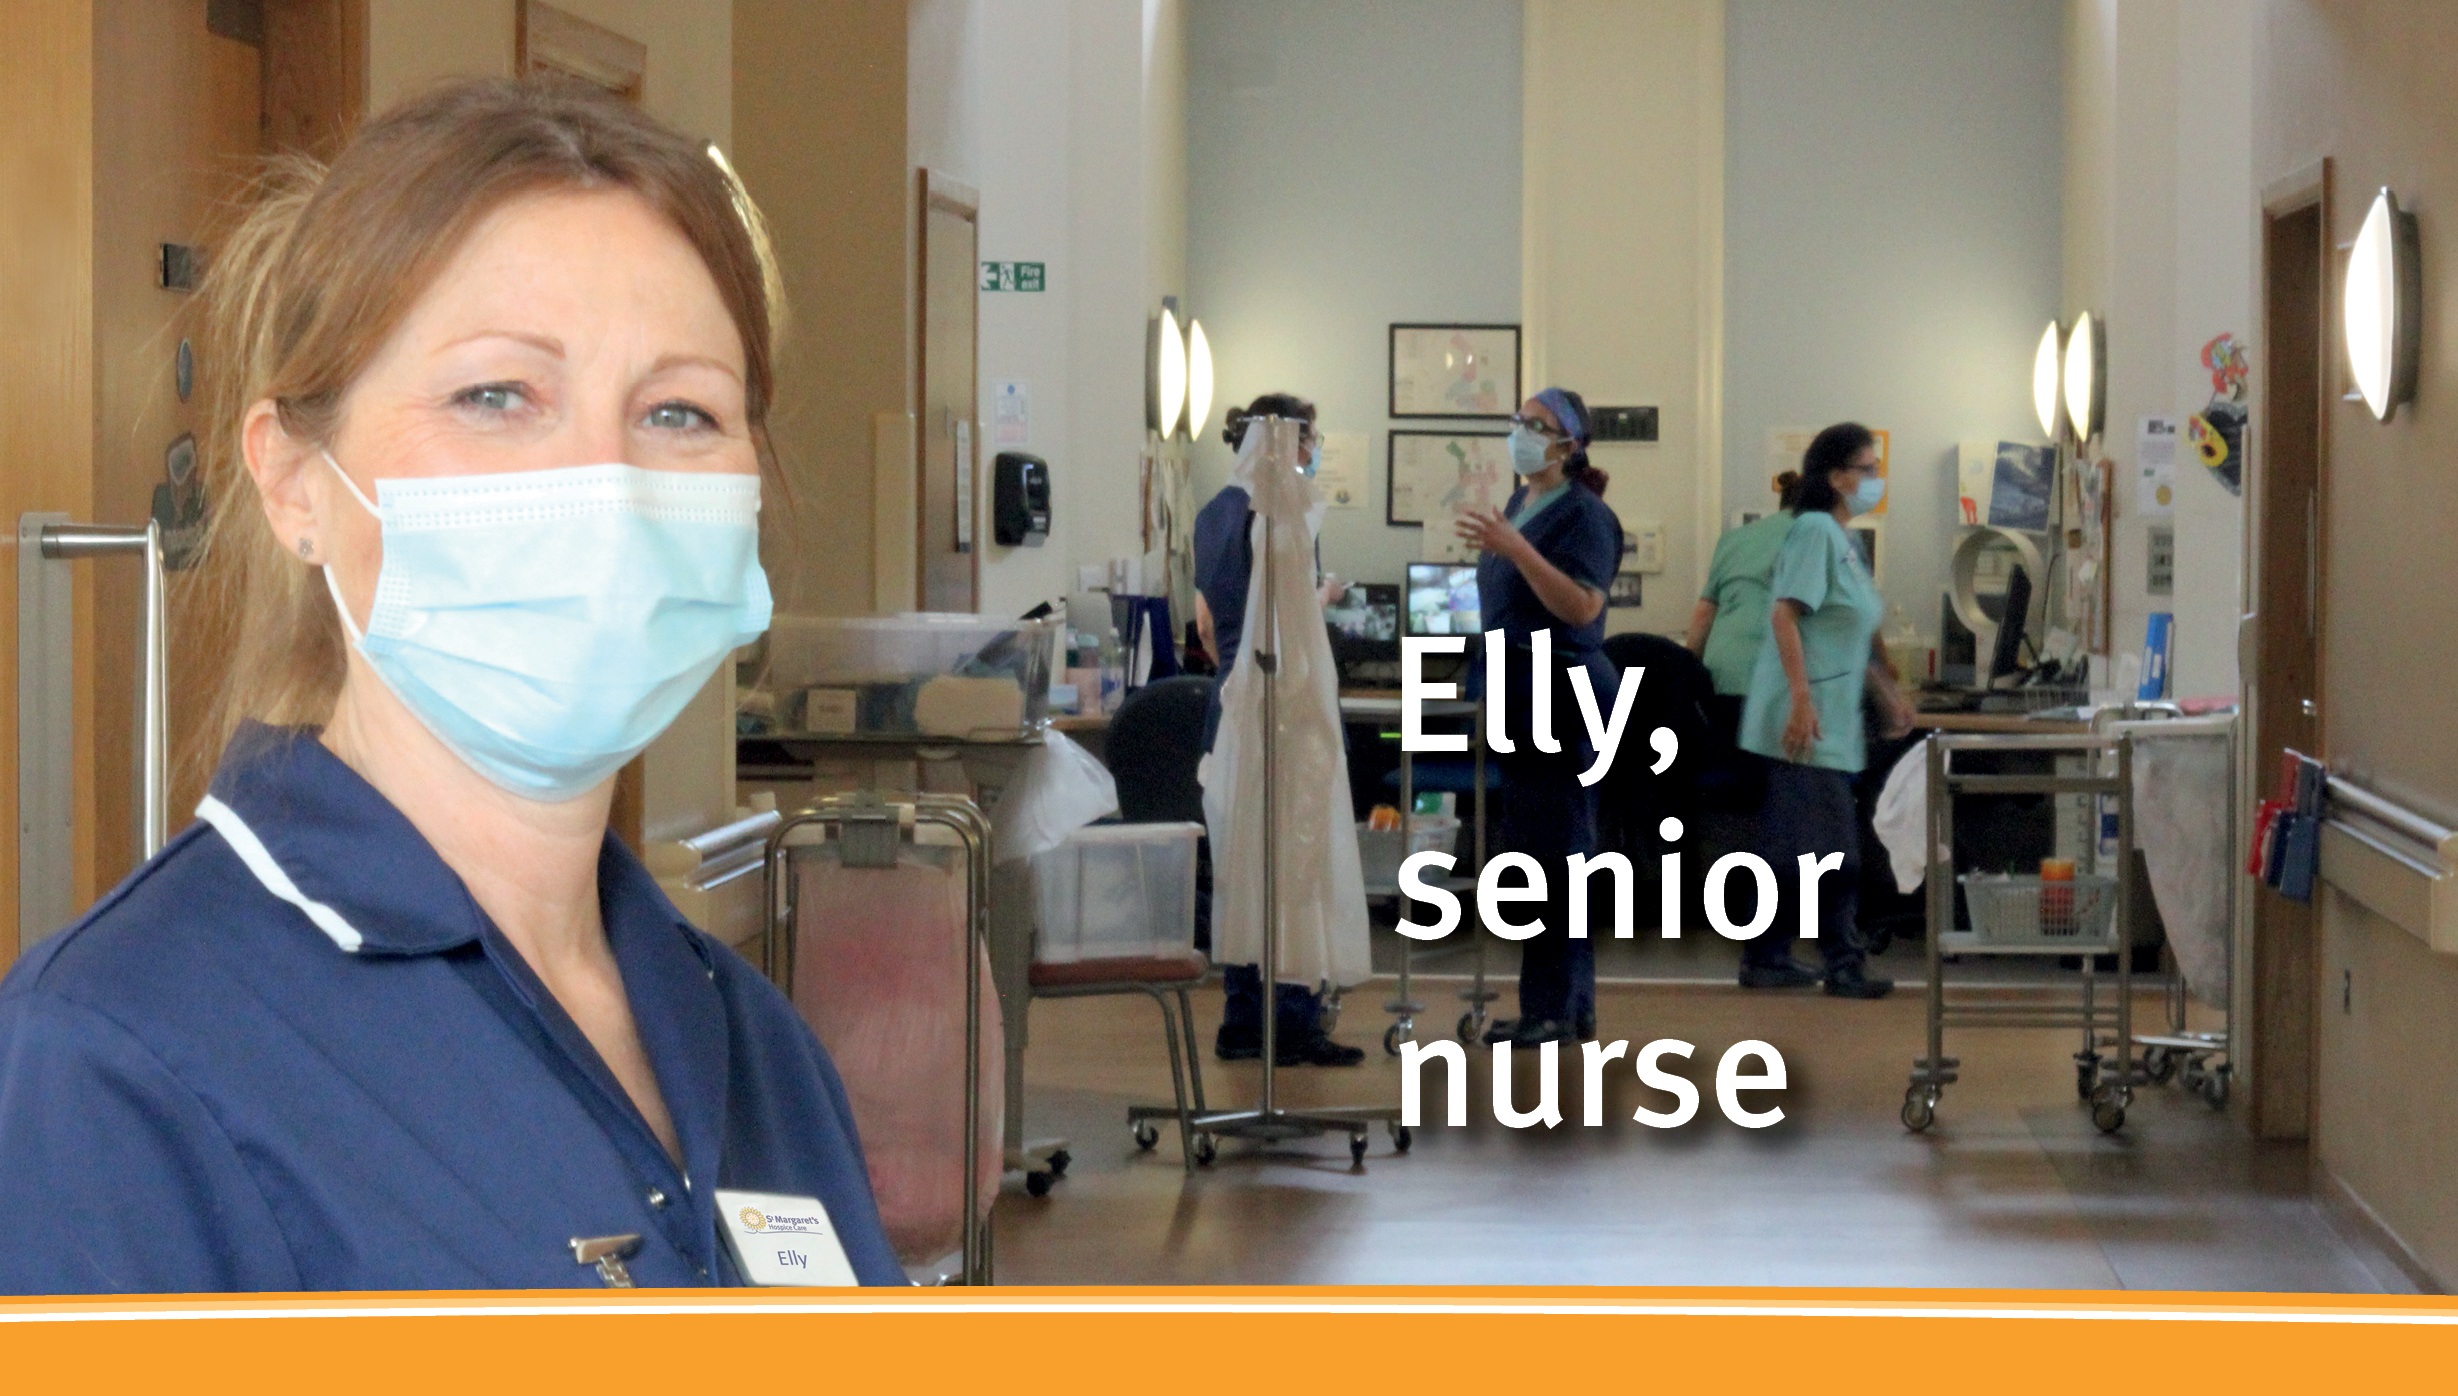 Elly senior nurse st margaret's hospice care somerset